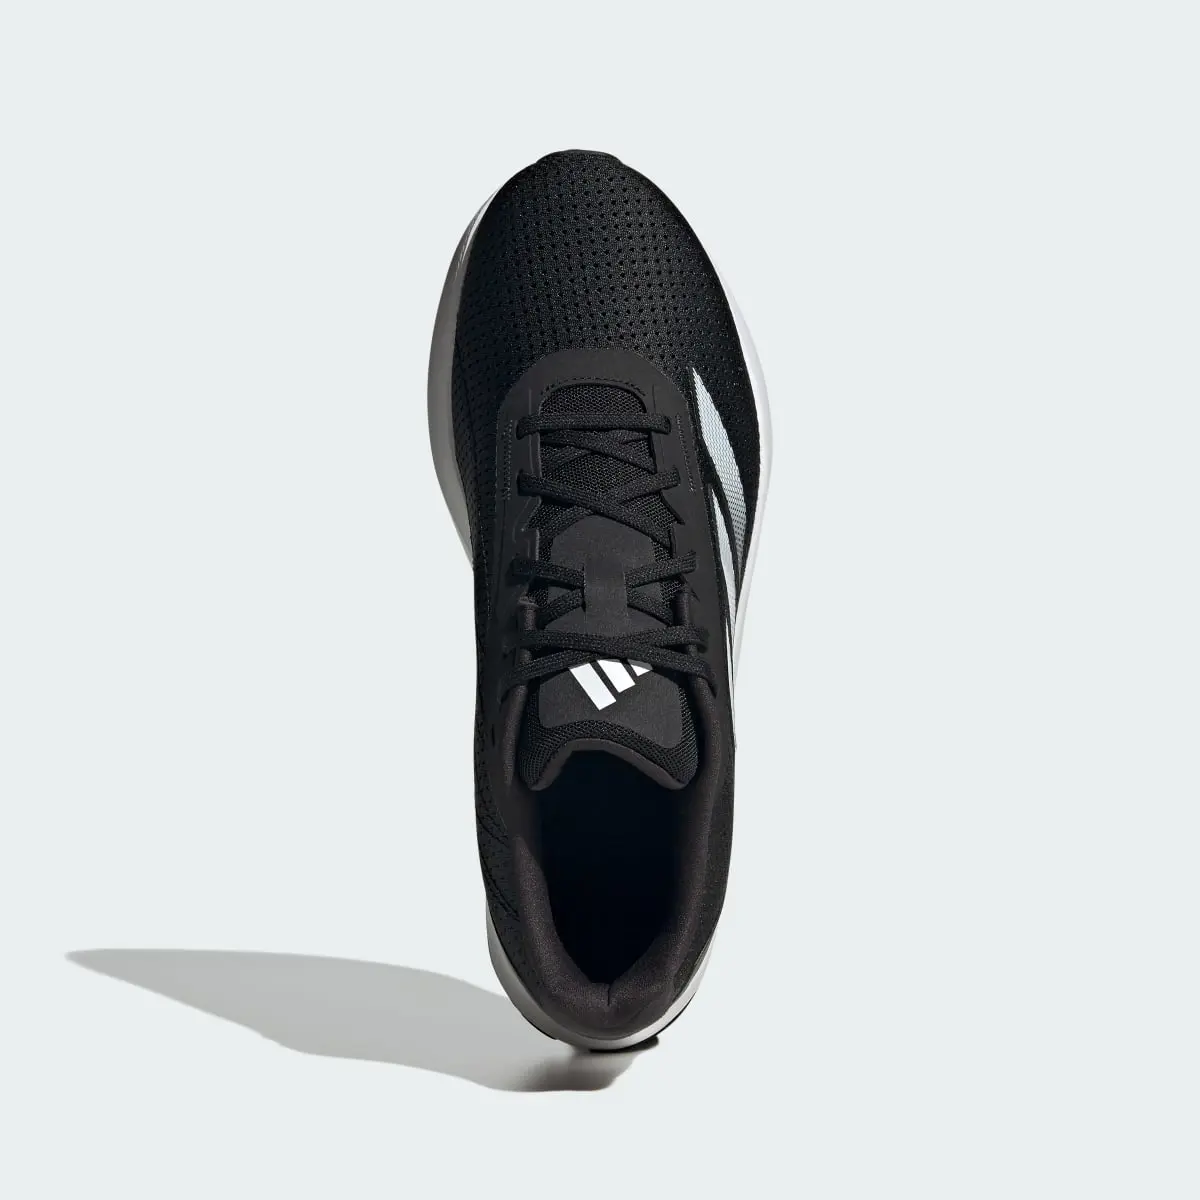 Adidas Duramo SL Wide Running Shoes. 3